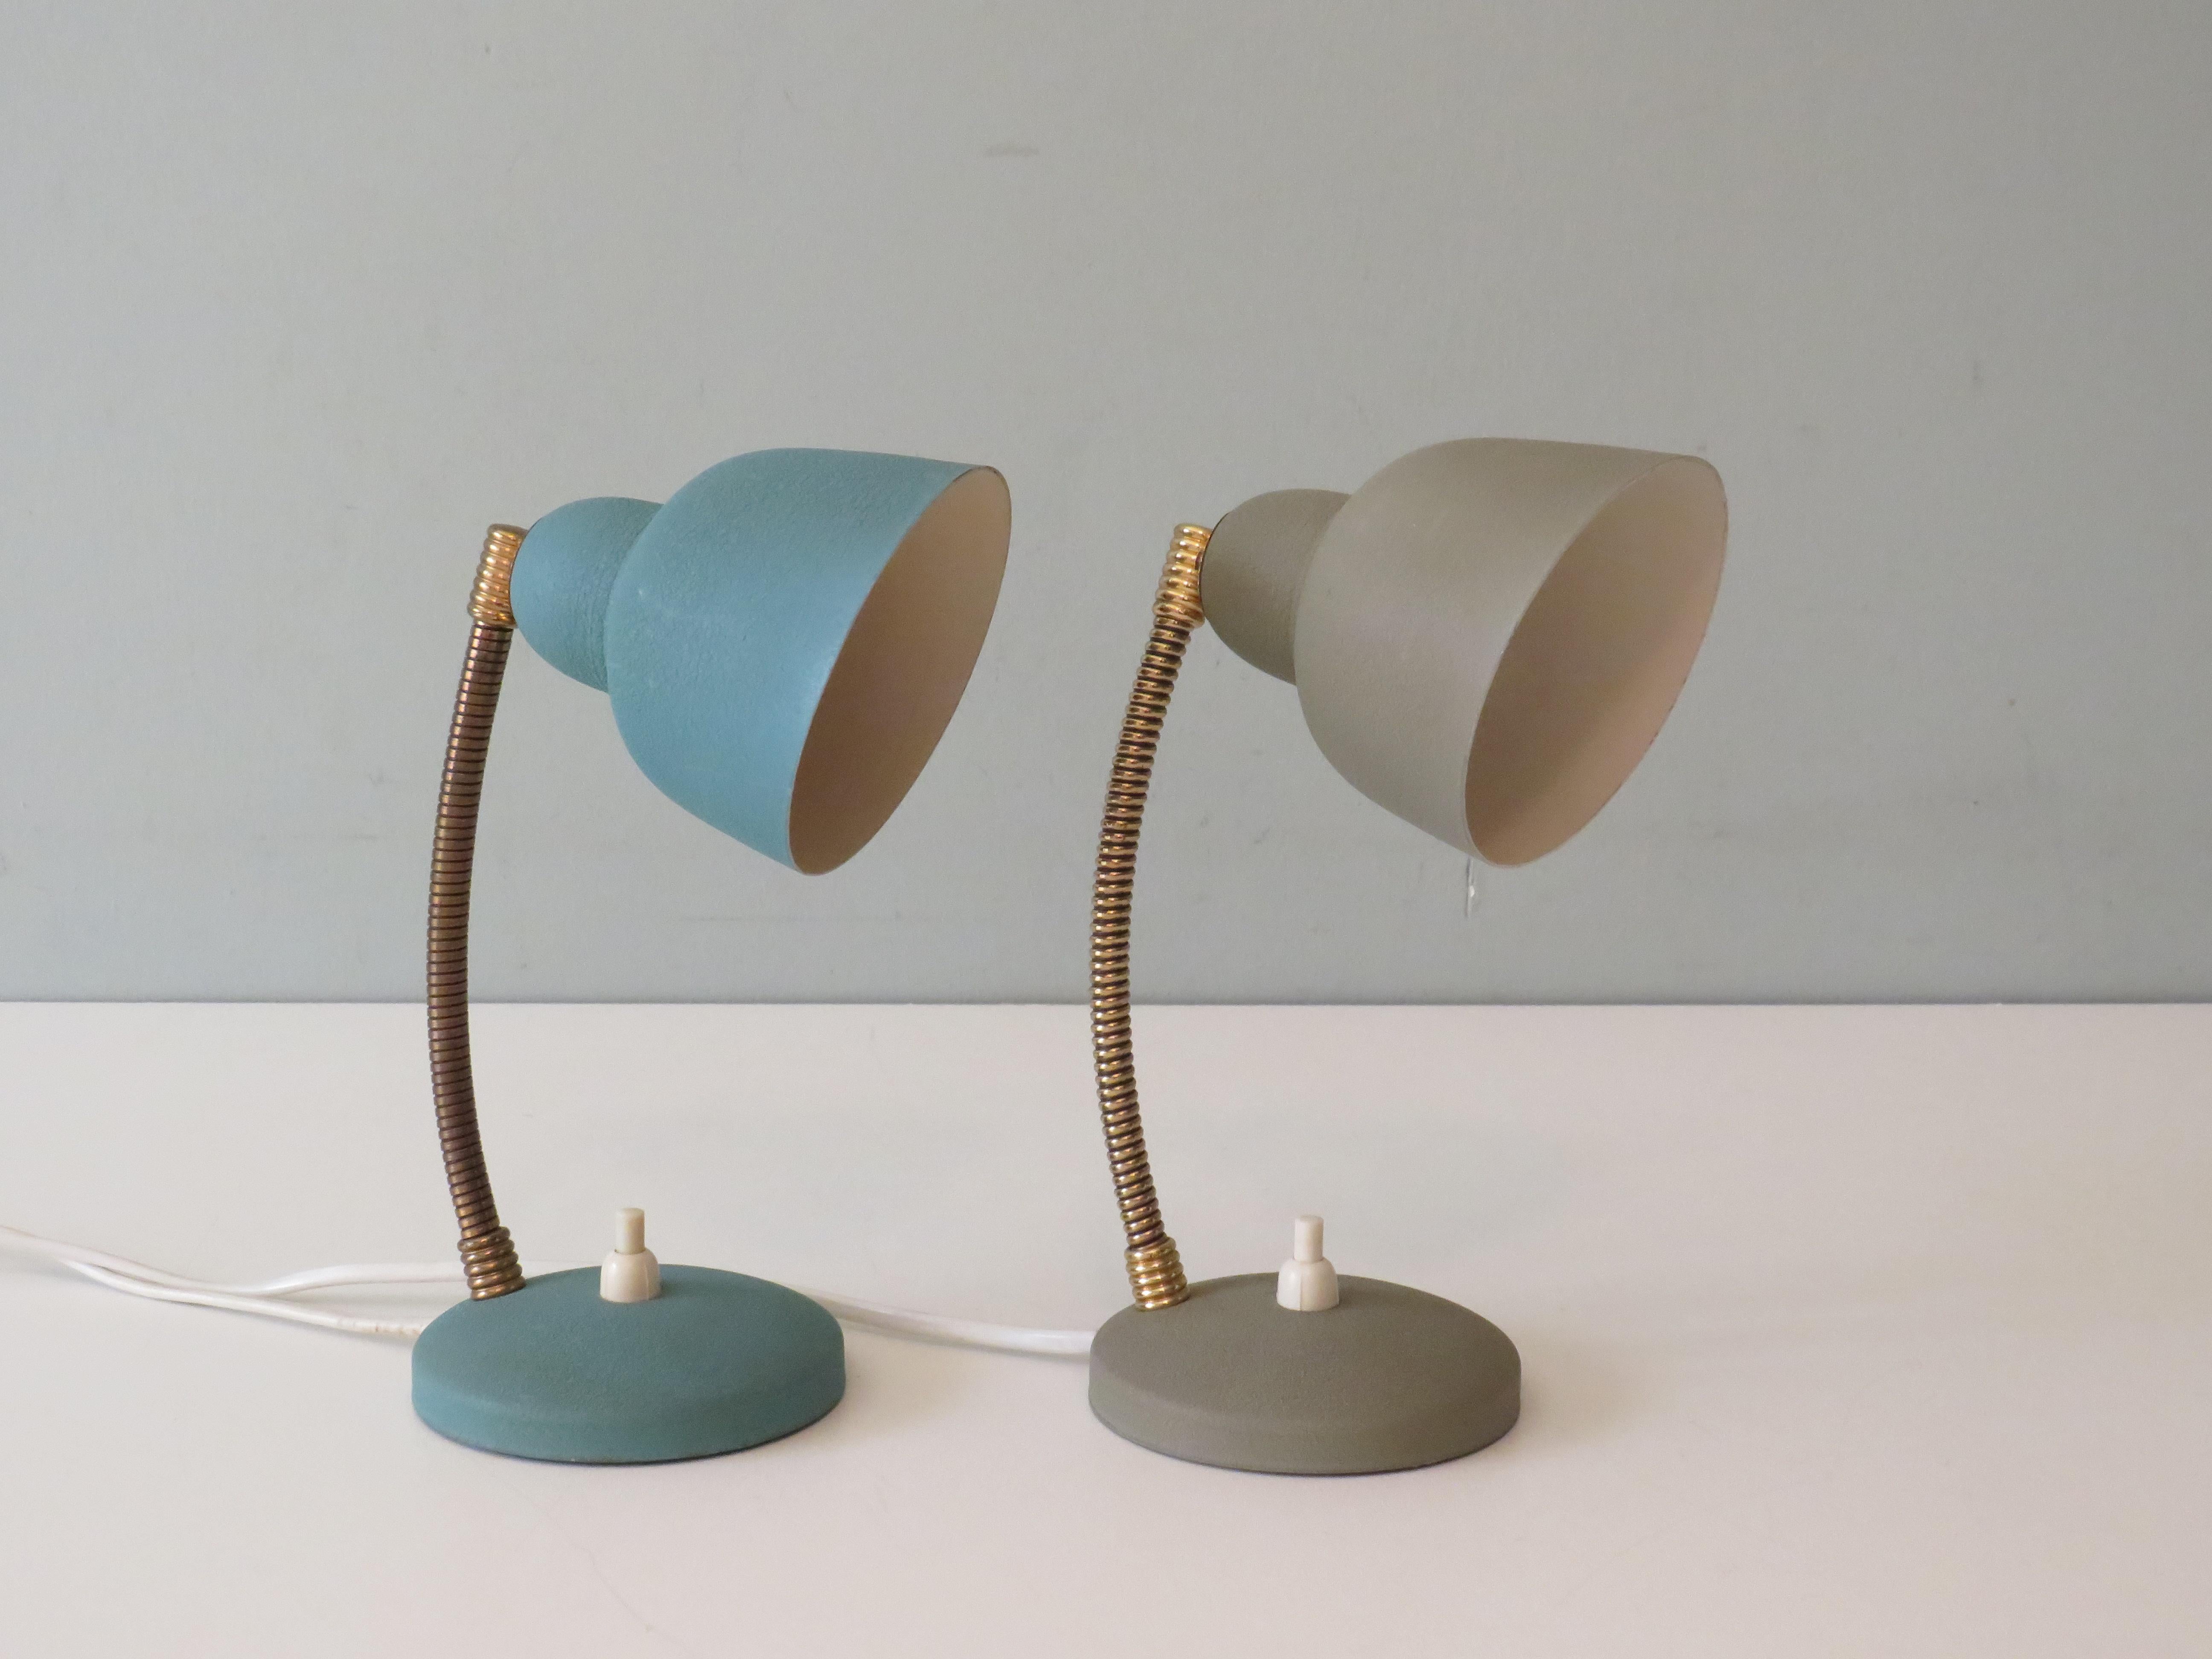 Aluminum 2 Desk Lamps - Bedside Lamps from Aluminor, France 1950